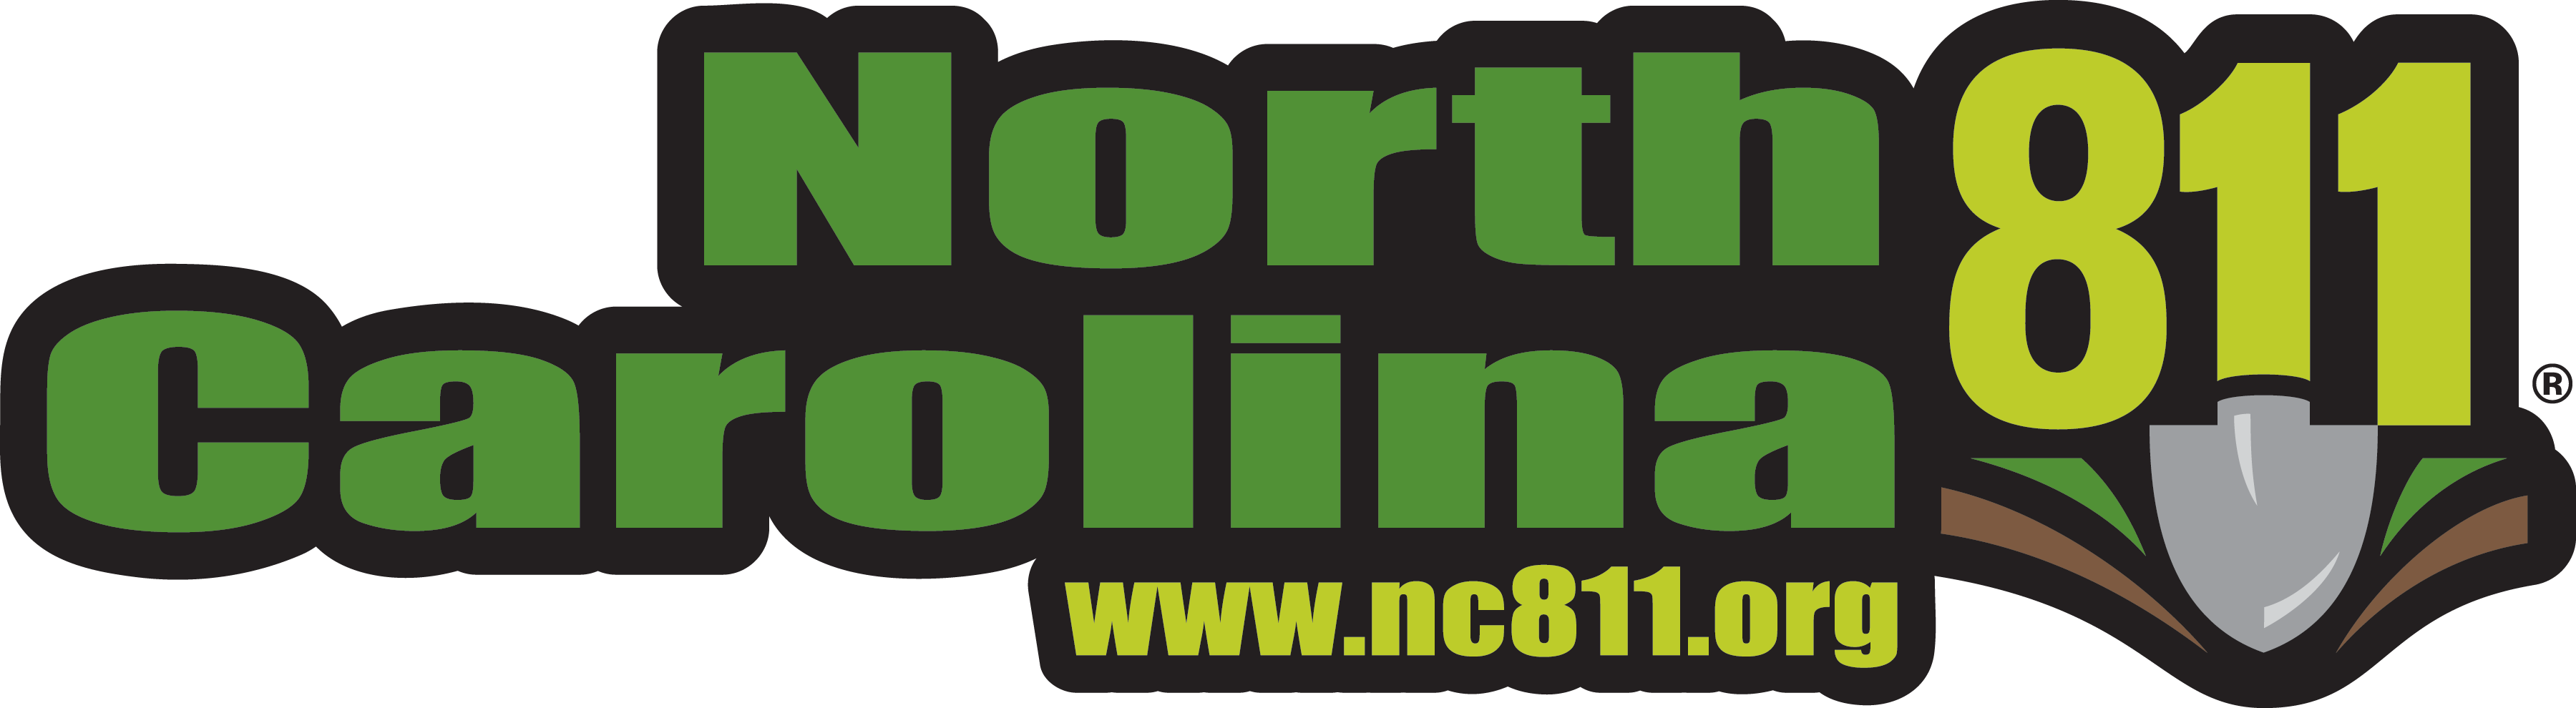 Call 811 Logo - NC811 Logo